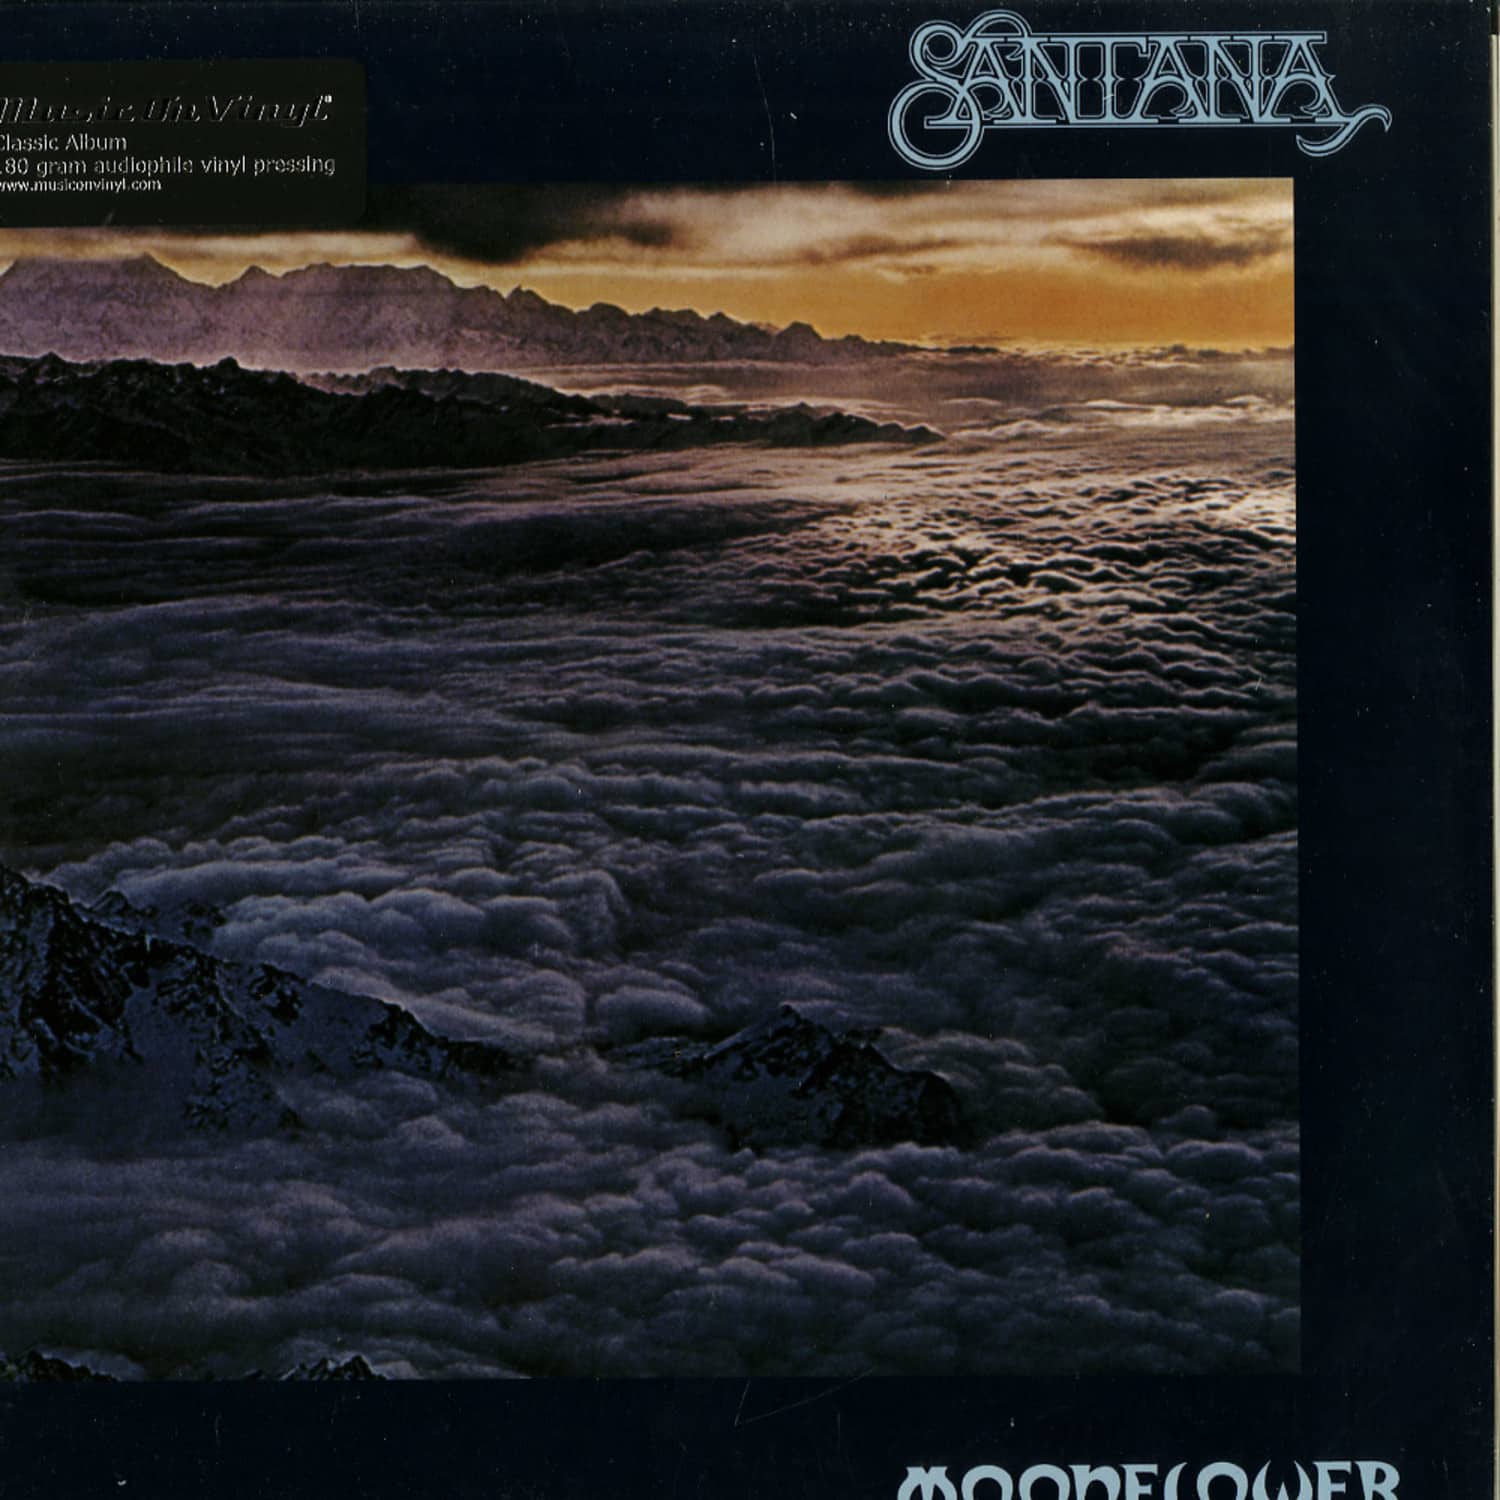 Santana - MOONFLOWER 